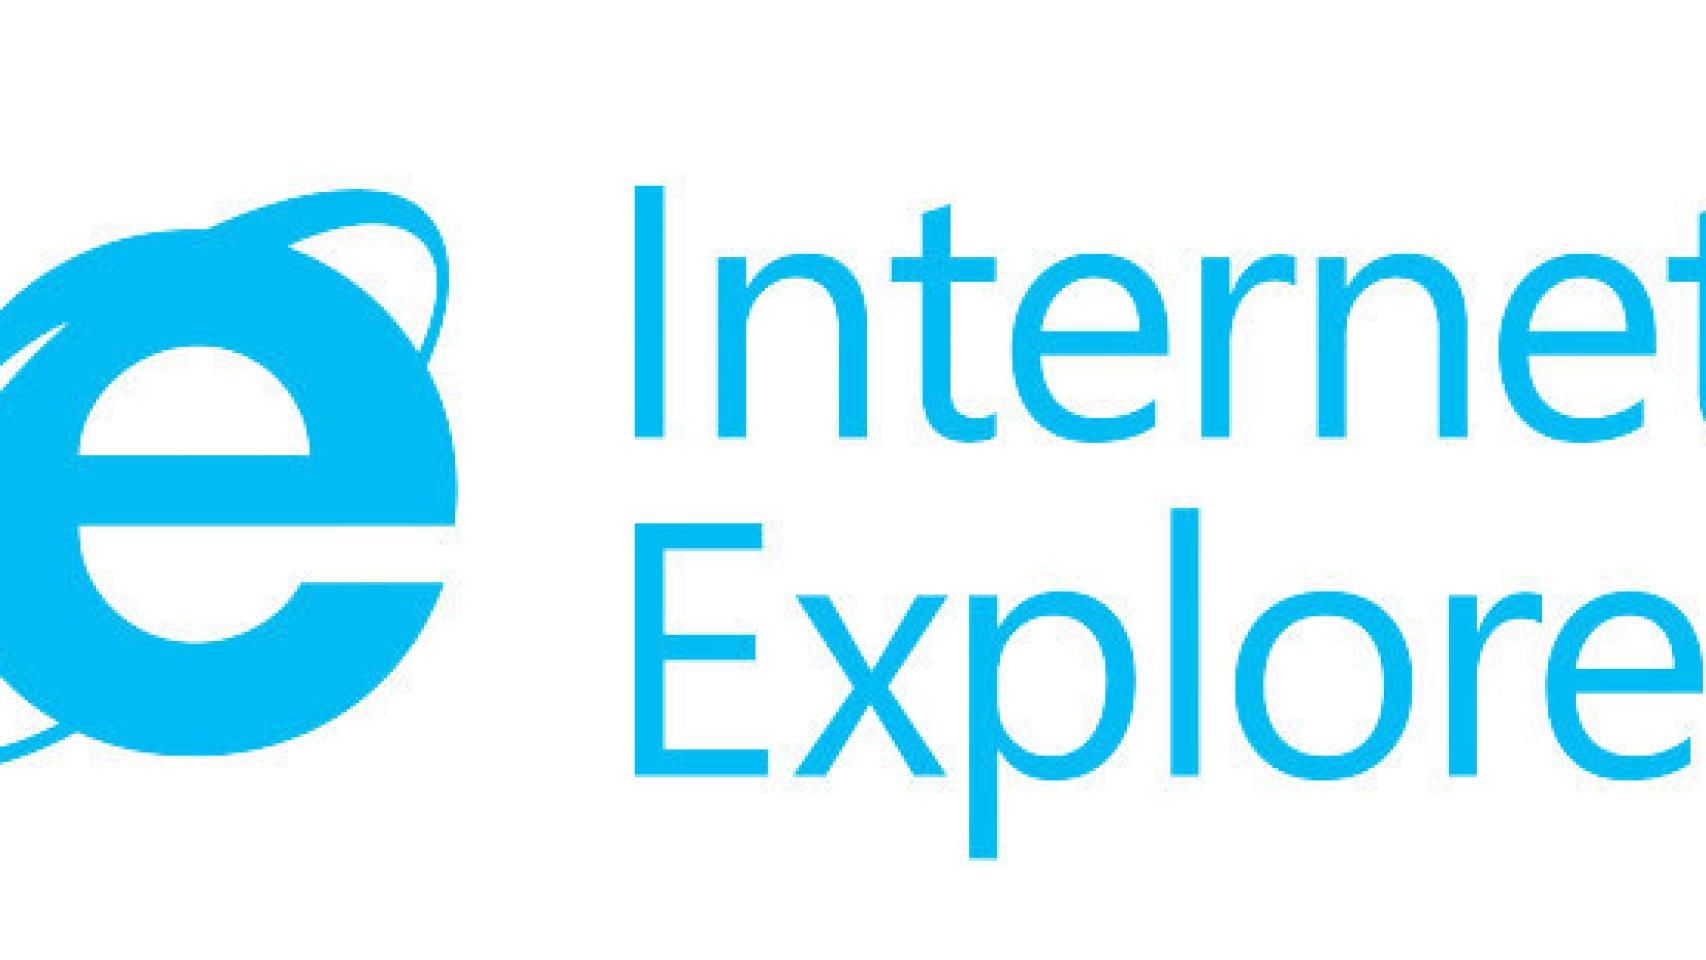 internet-explorer-logo